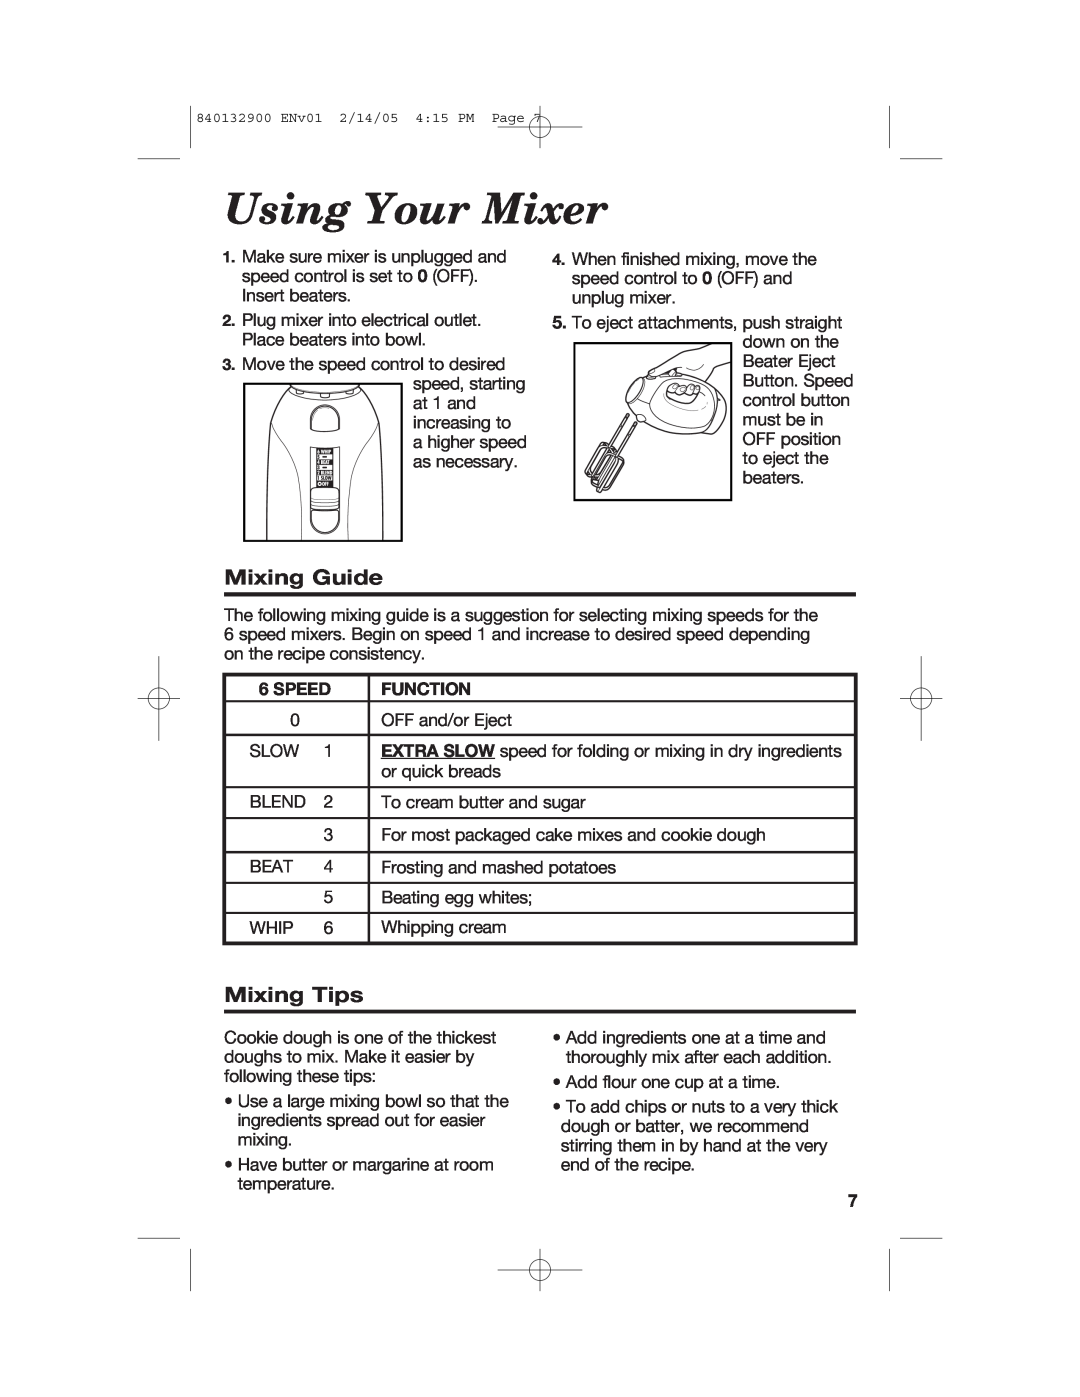 Hamilton Beach 840132900 manual Using Your Mixer, Mixing Guide, Mixing Tips 